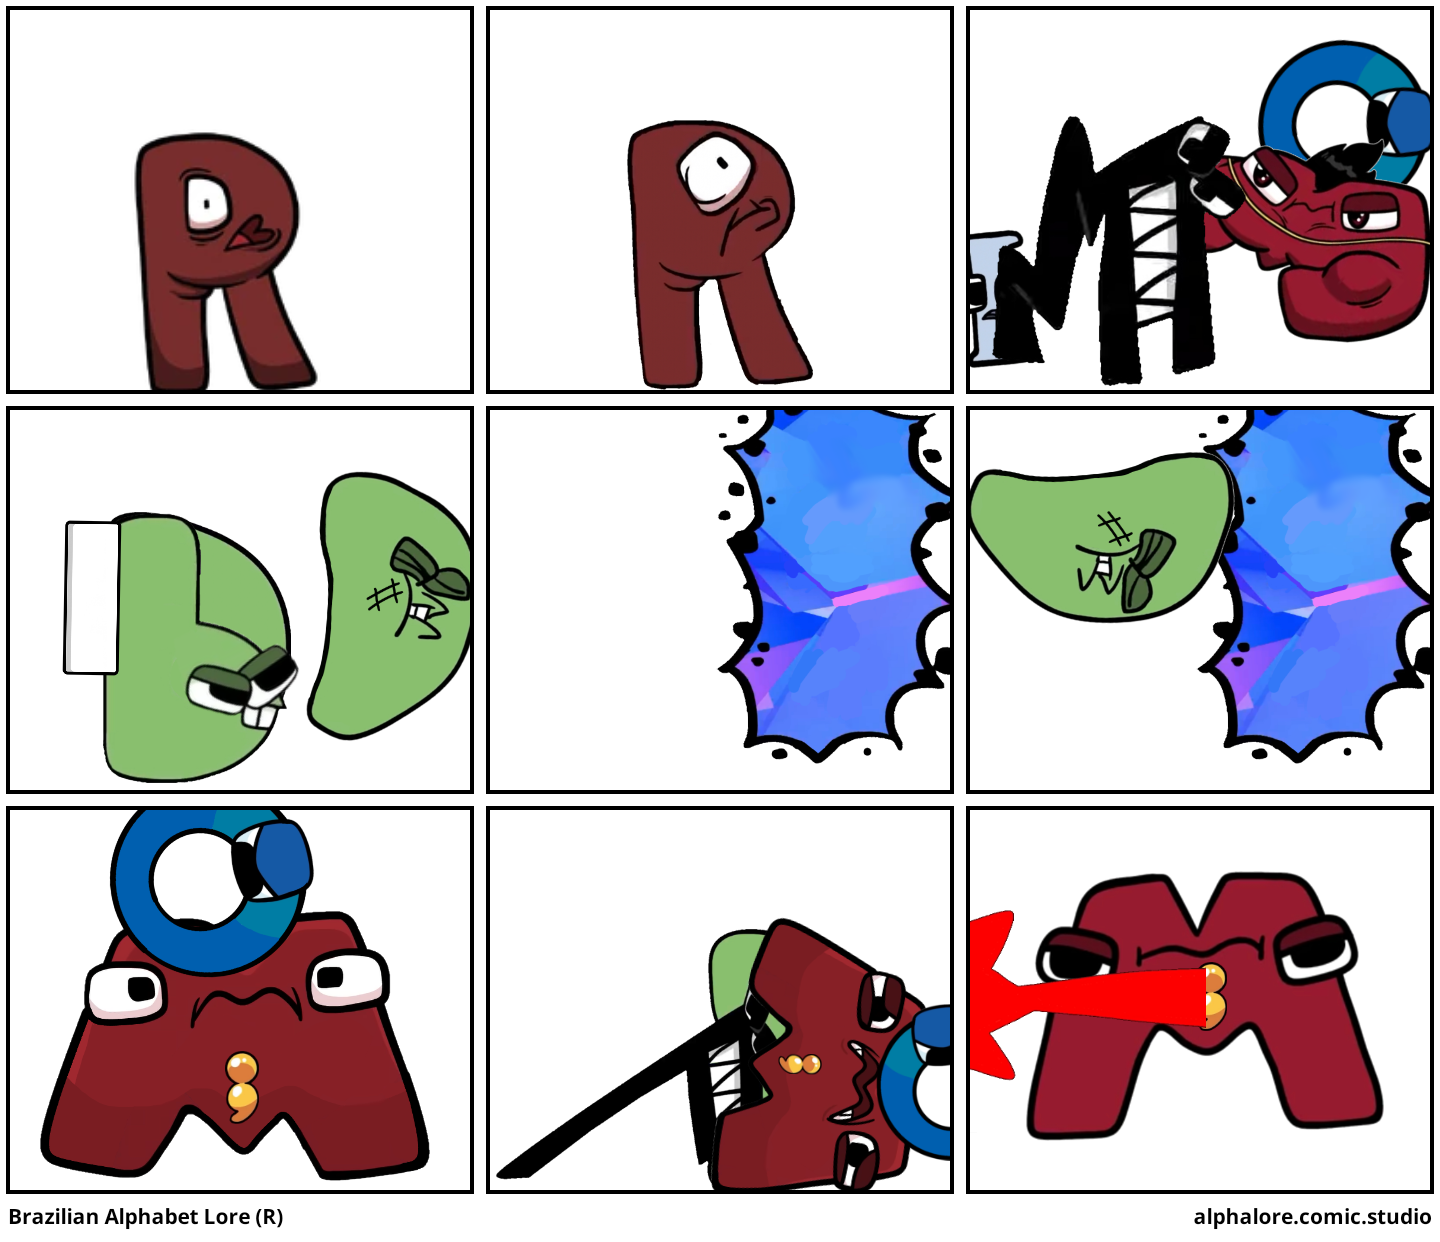 Brazilian Alphabet Lore (N part 2) - Comic Studio